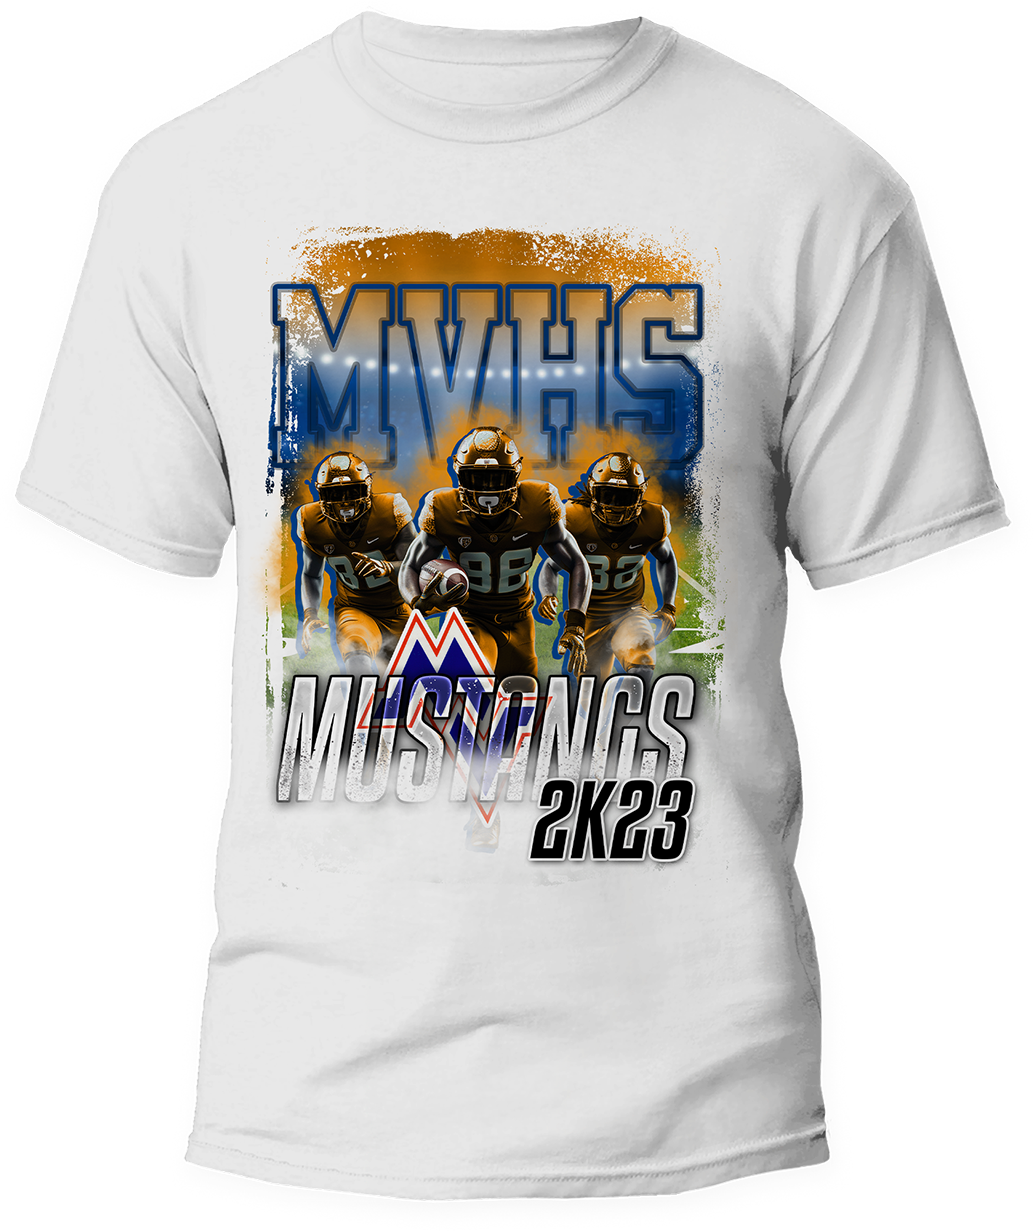 Midland Valley High Football T-Shirt